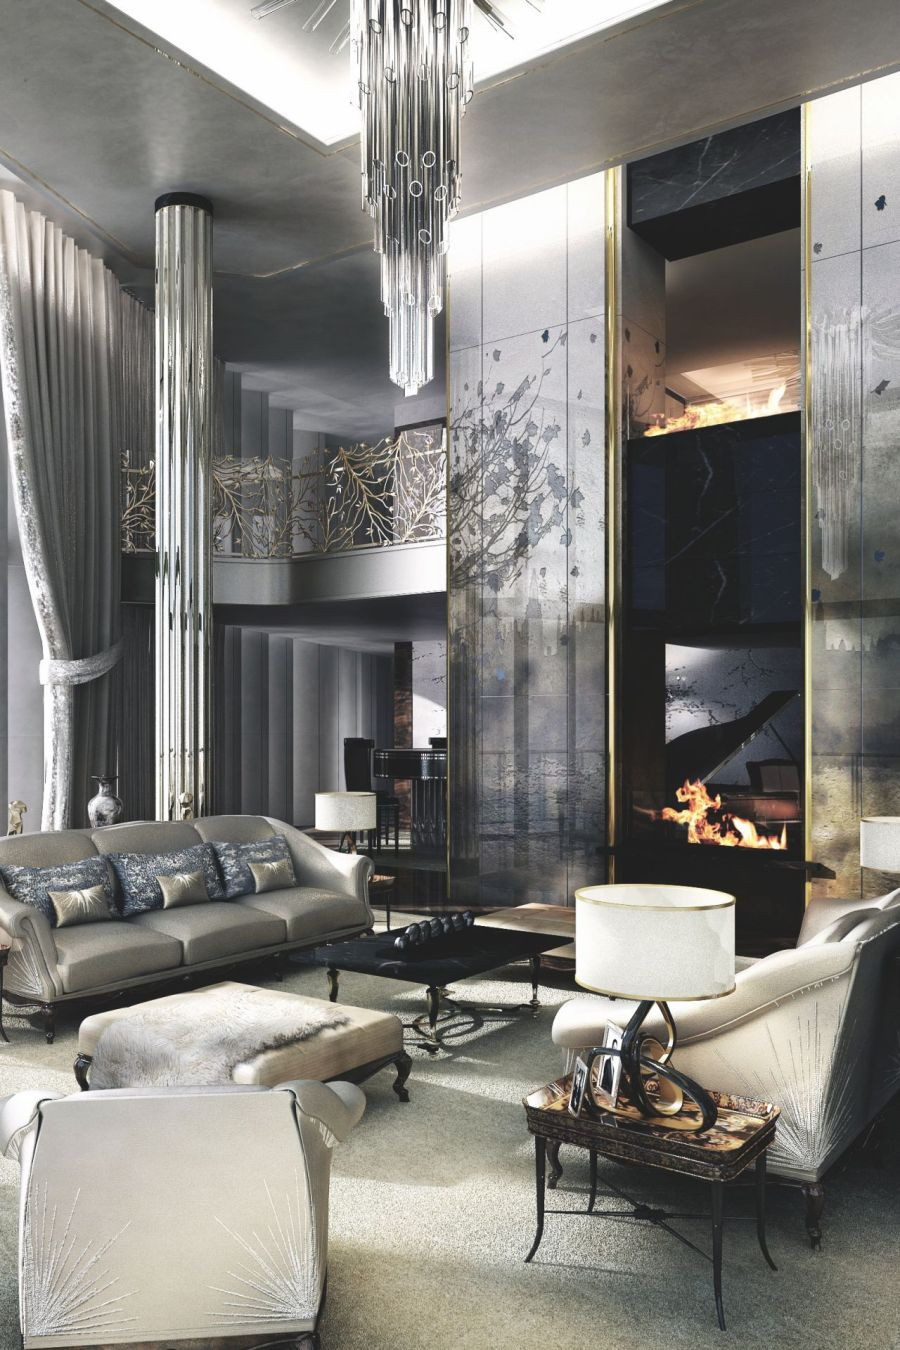 Glamour Living Room Ideas
 Interior Design Ideas For A Glamorous Living Room